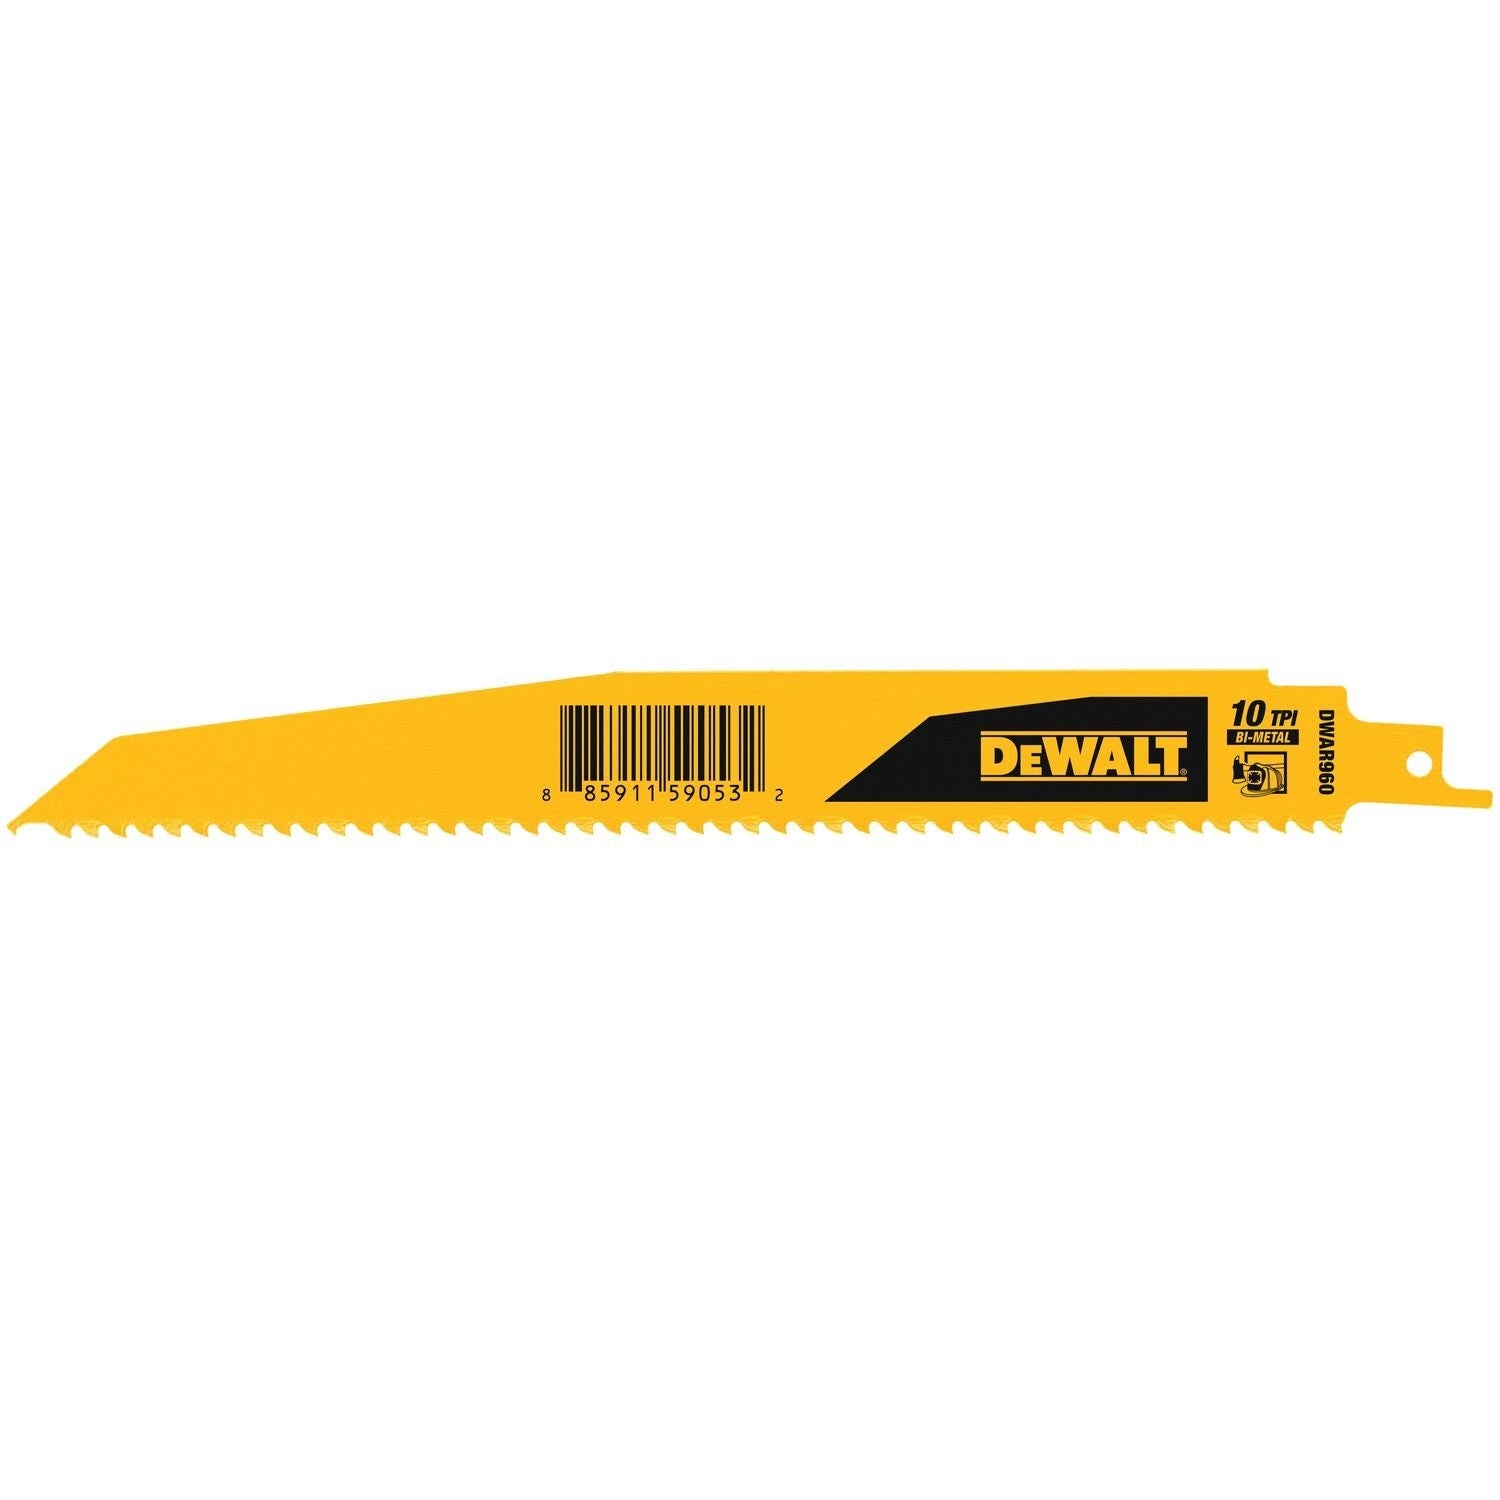 DEWALT DWAR960 9-in 10 TPI Bi-Metal Reciprocating Saw Blades for Wood, Metal, Drywall, 5-pk